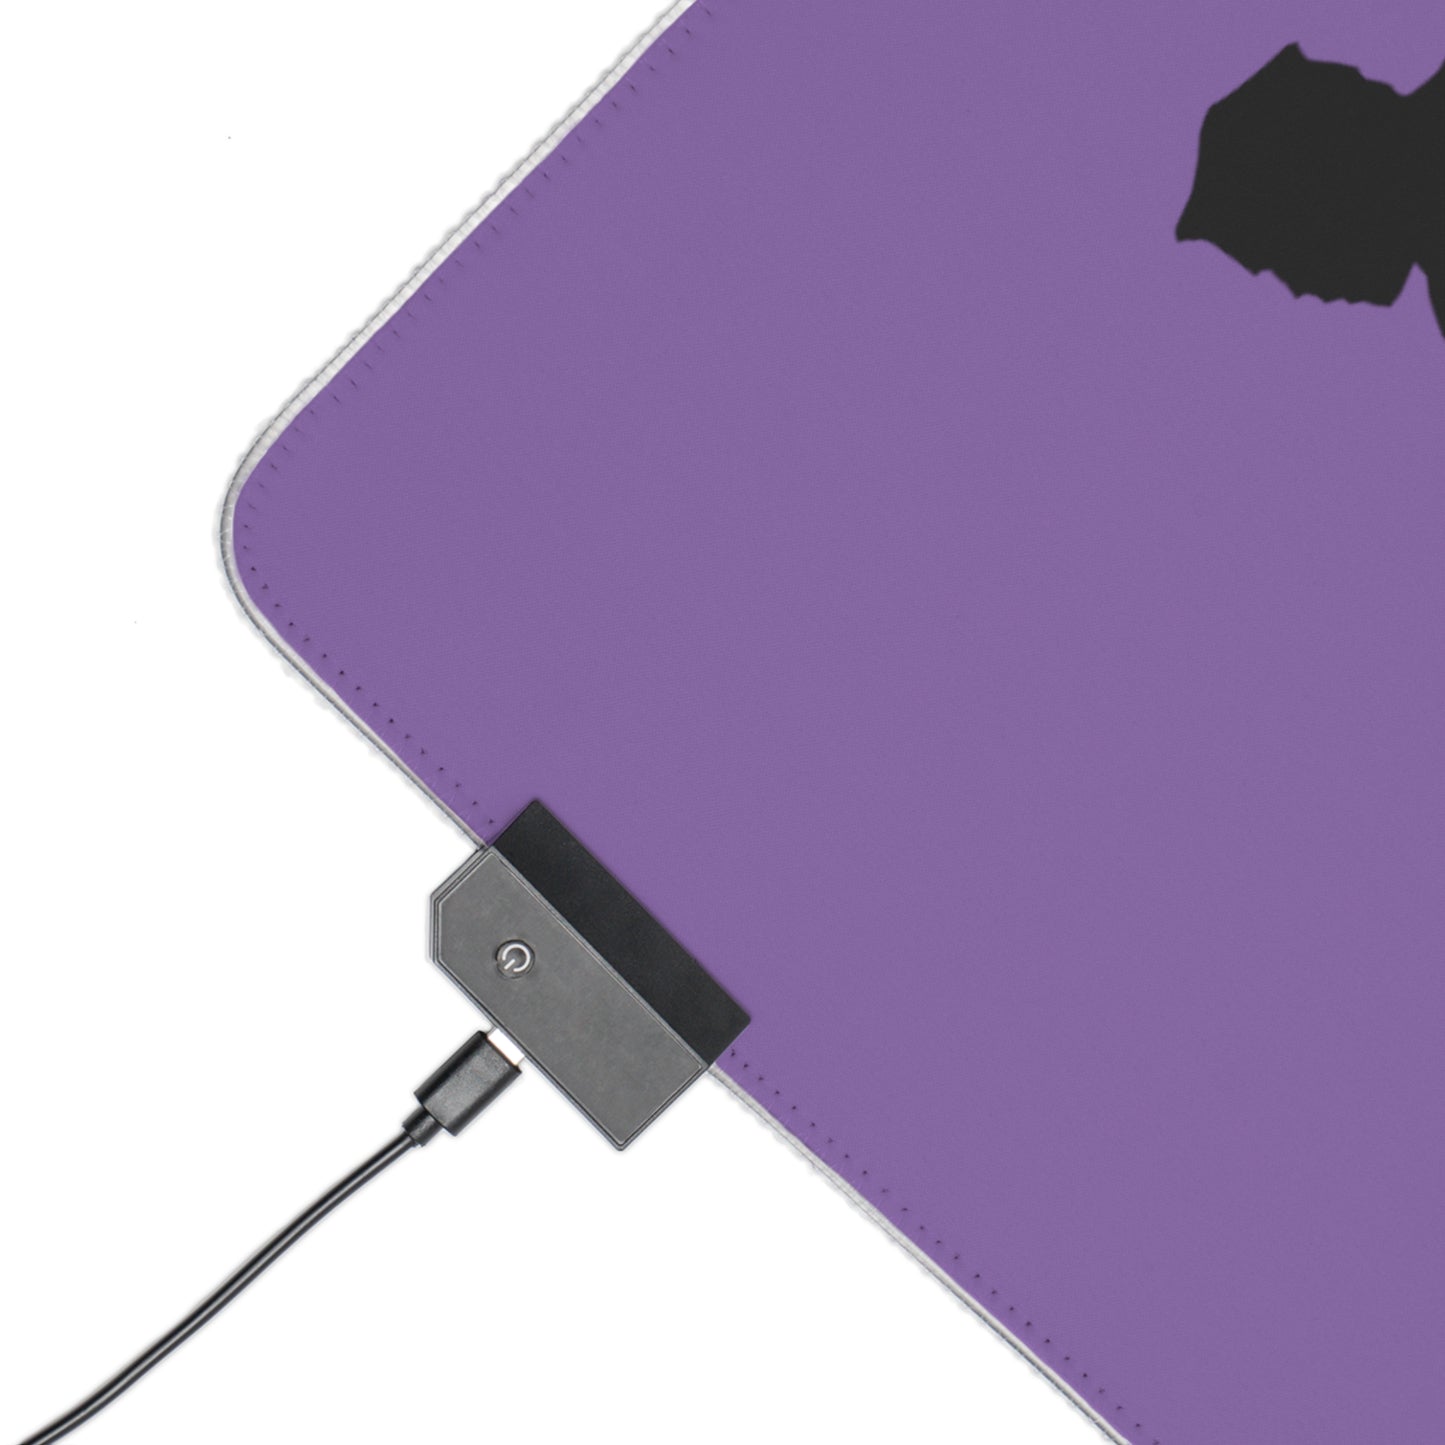 LED Gaming Mouse Pad: Hockey Lite Purple